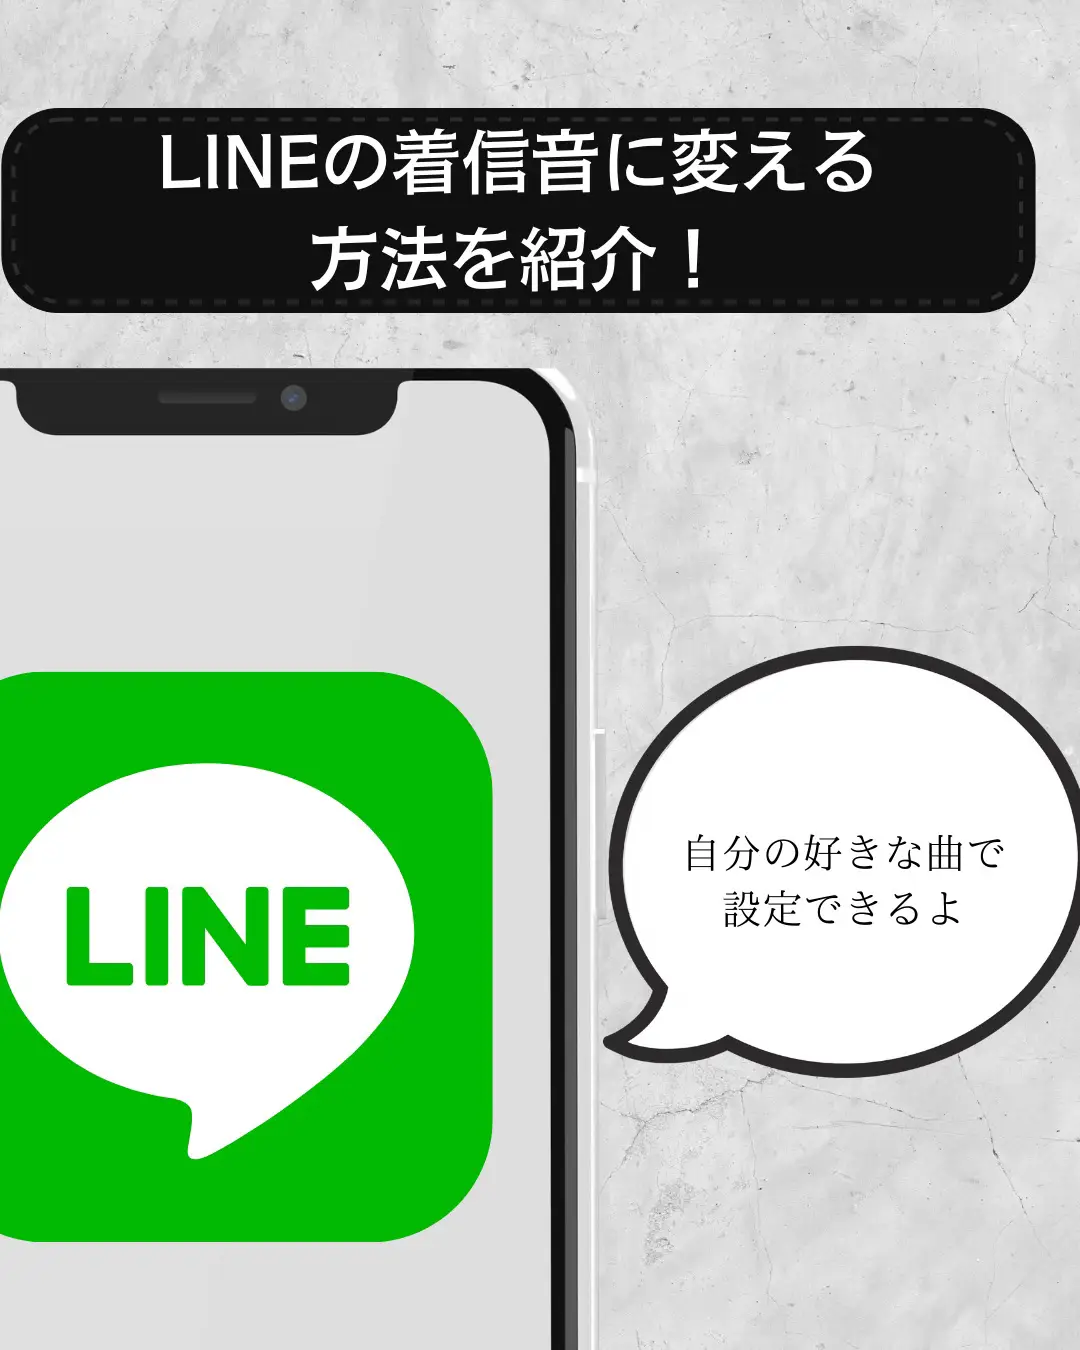 LINEの着信音を変える方法の画像 (2枚目)